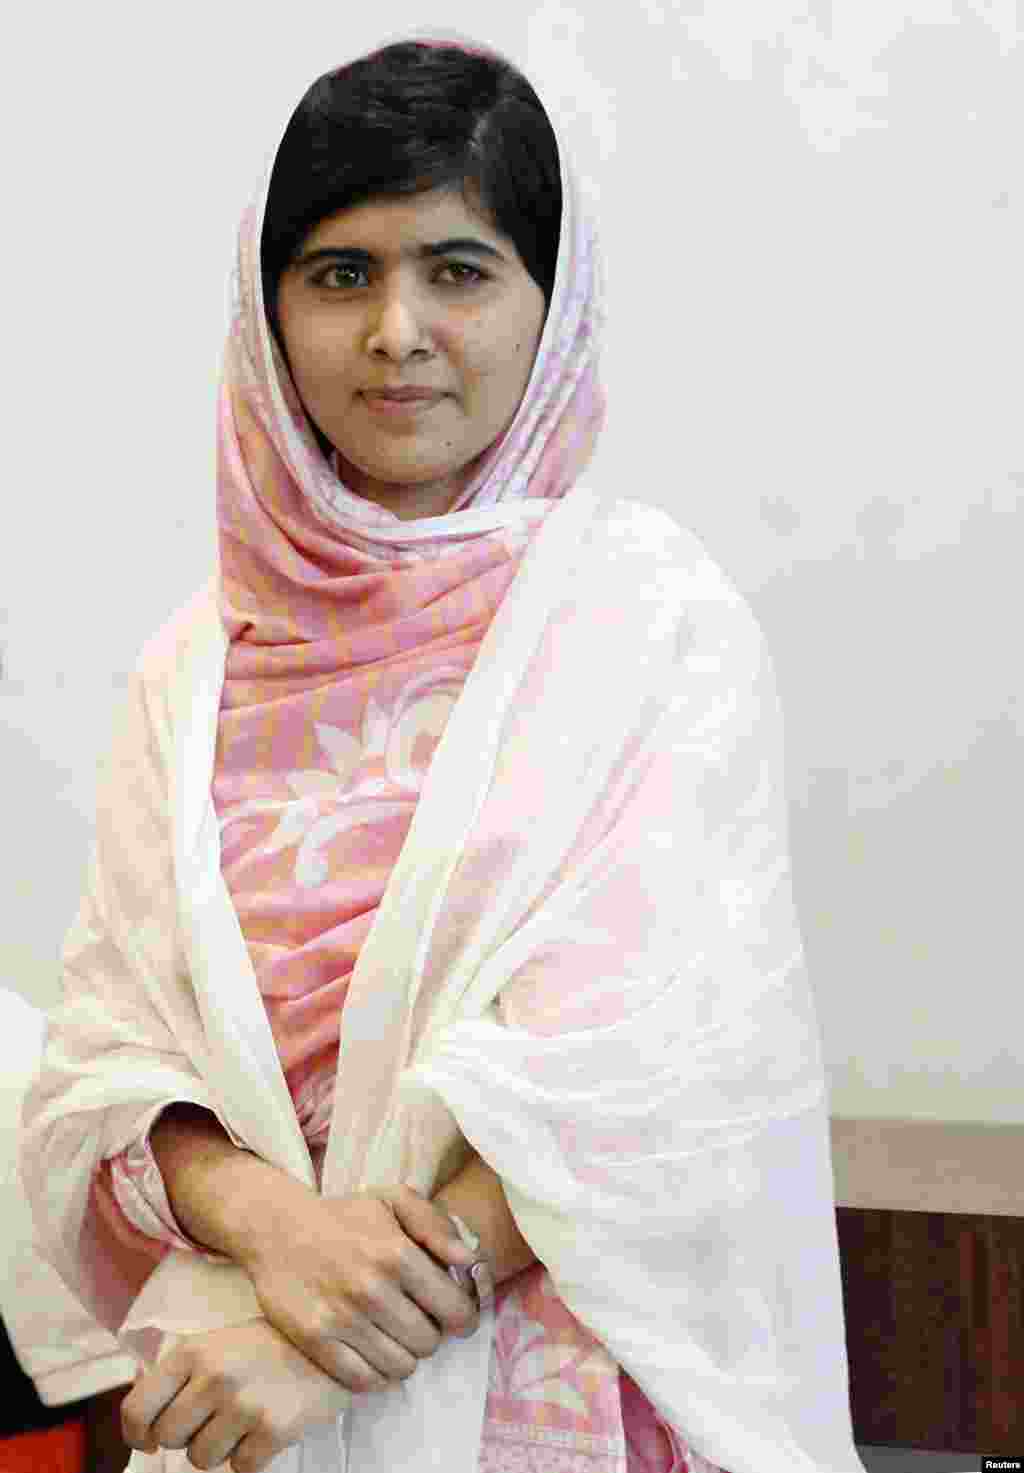 &nbsp;پاکستانی طالبہ ملالہ یوسفزئی کی 12 جولائی کو سولہویں سالگرہ کے موقع پر &rsquo;عالمی یوم ملالہ&lsquo; منایا گیا۔